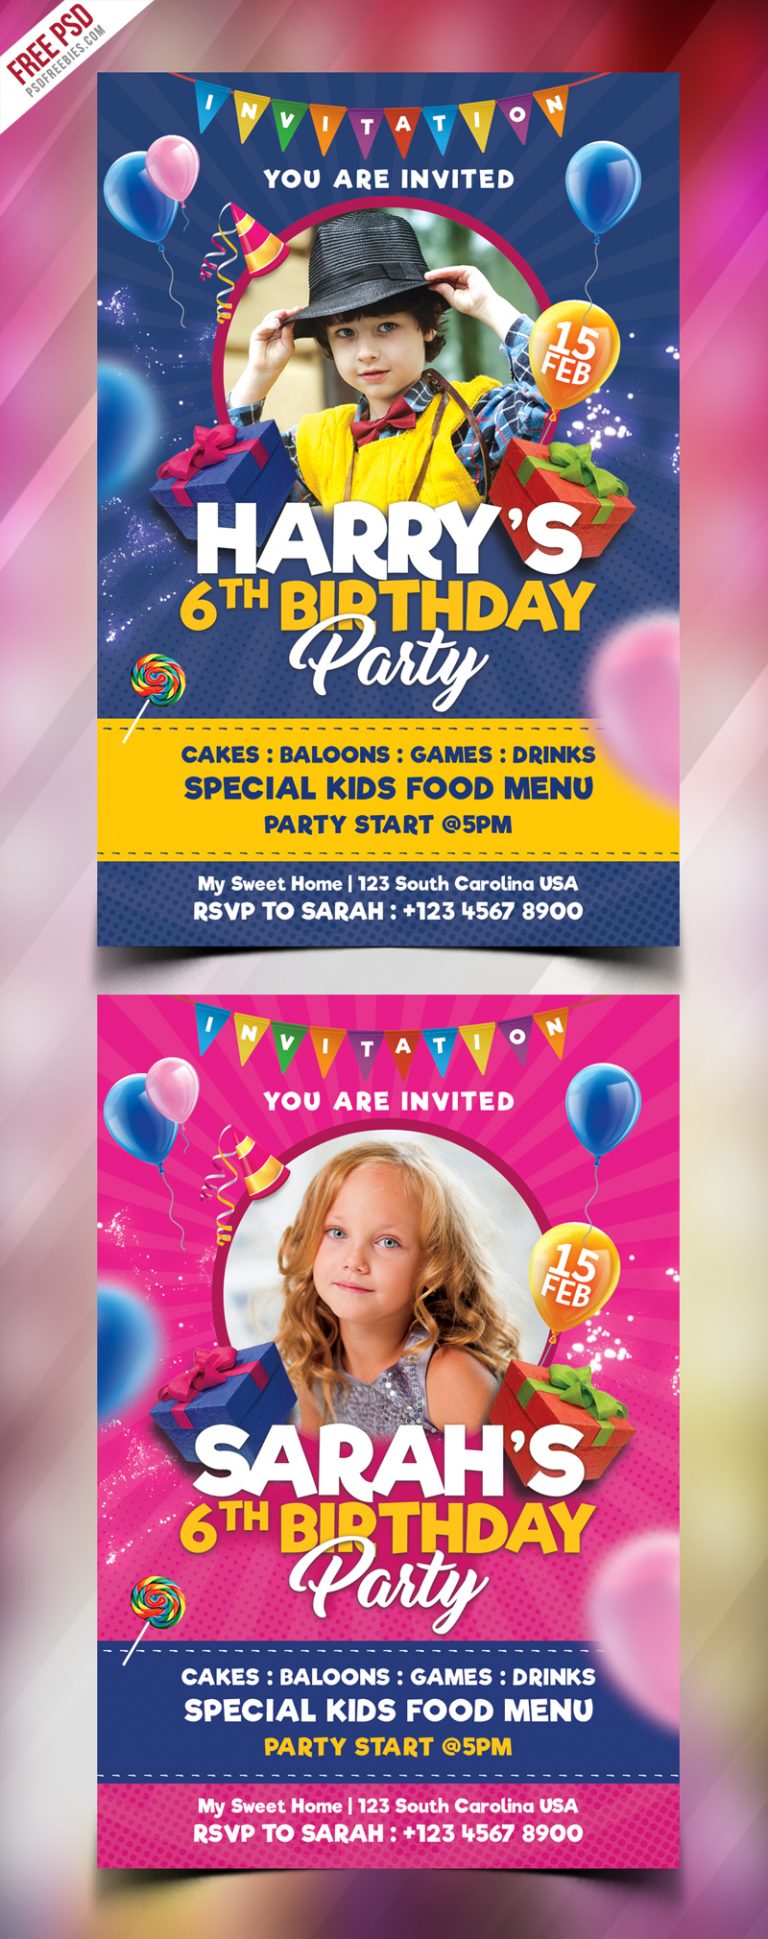 Kids Birthday Party Invitation Card PSD | PSDFreebies.com